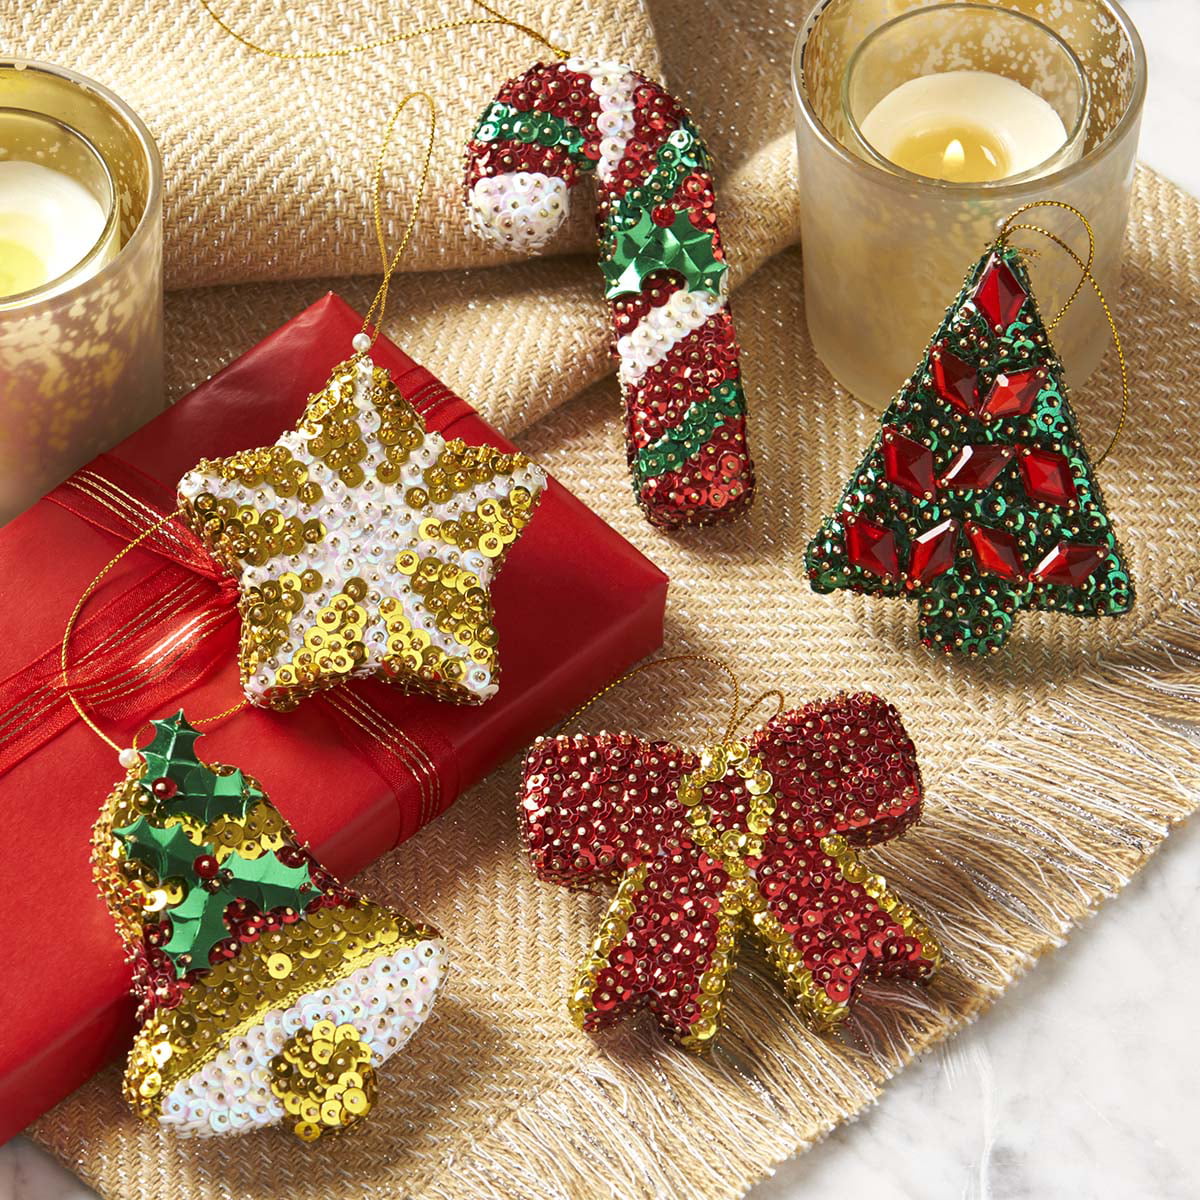 Herrschners® Holiday Delights Ornament Kit  Walmart.com  Walmart.com